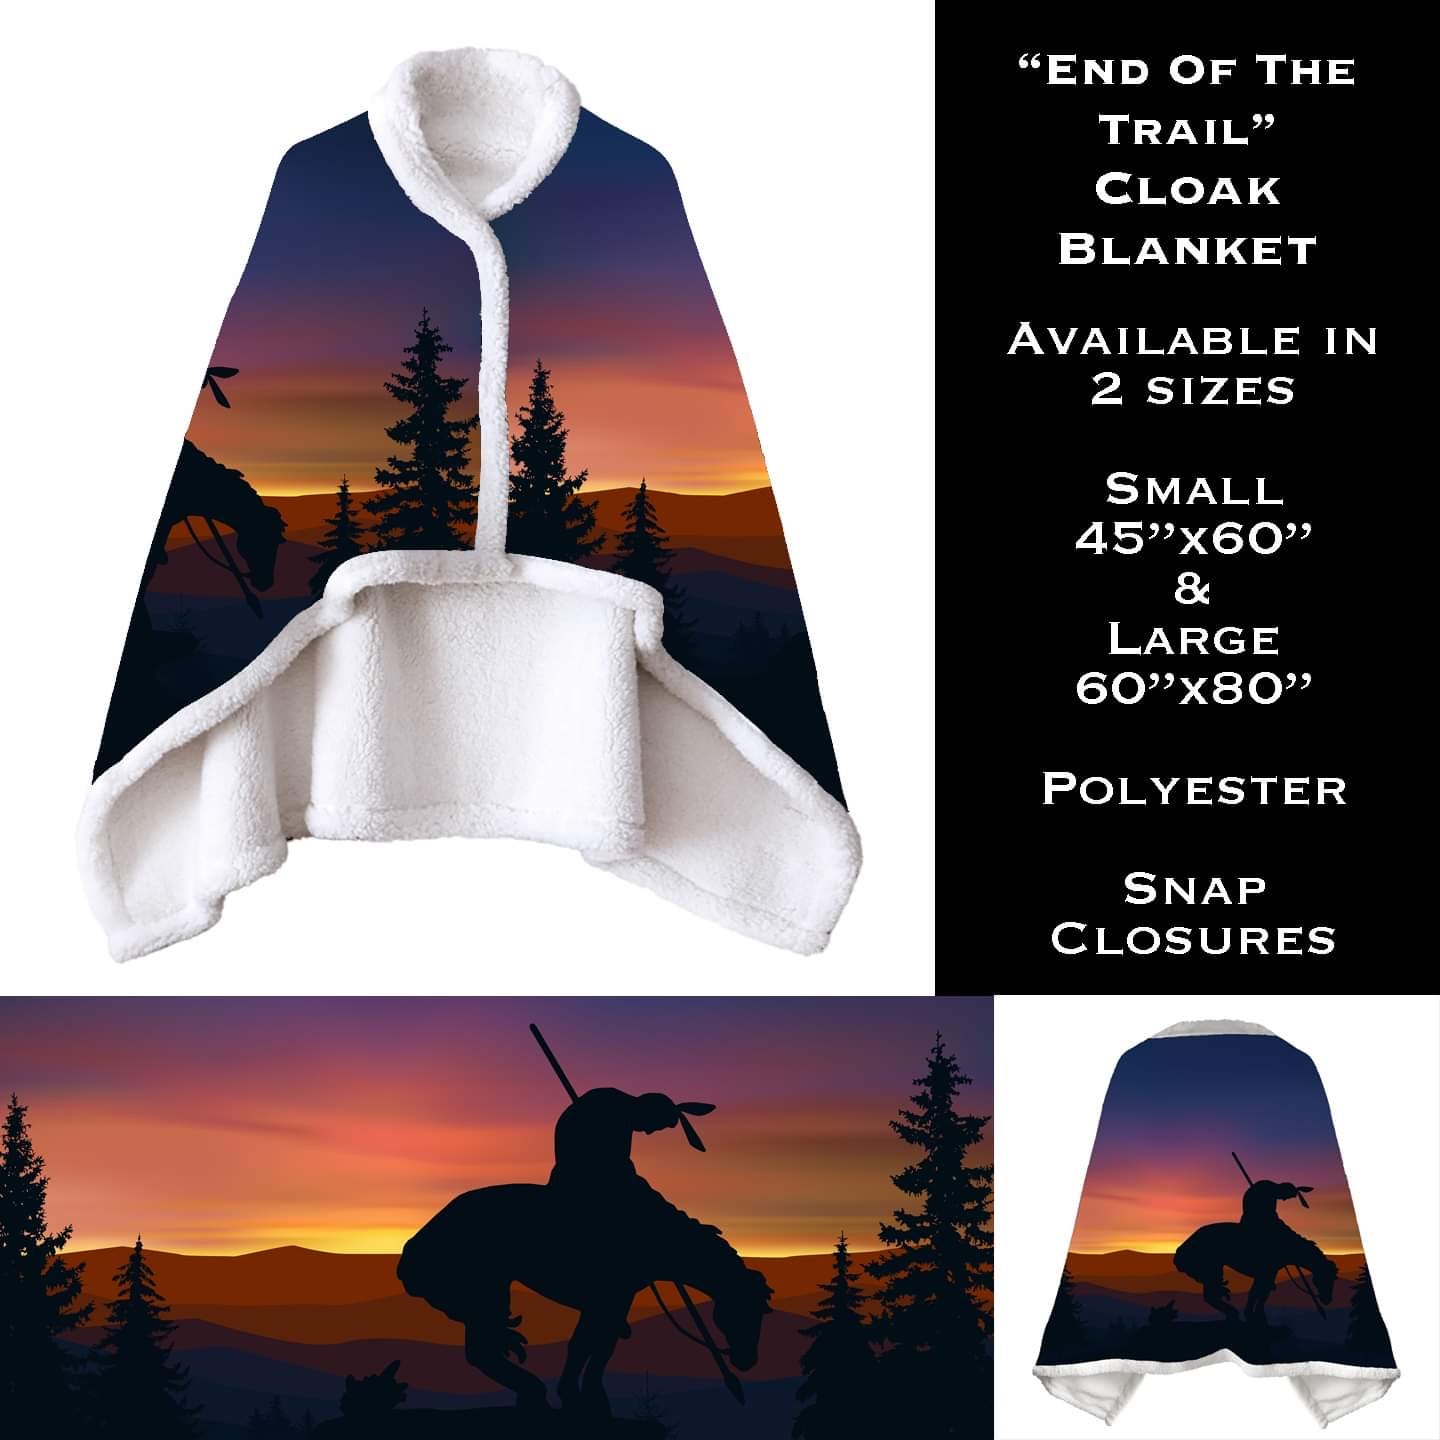 End of the Trail - Cloak Blanket